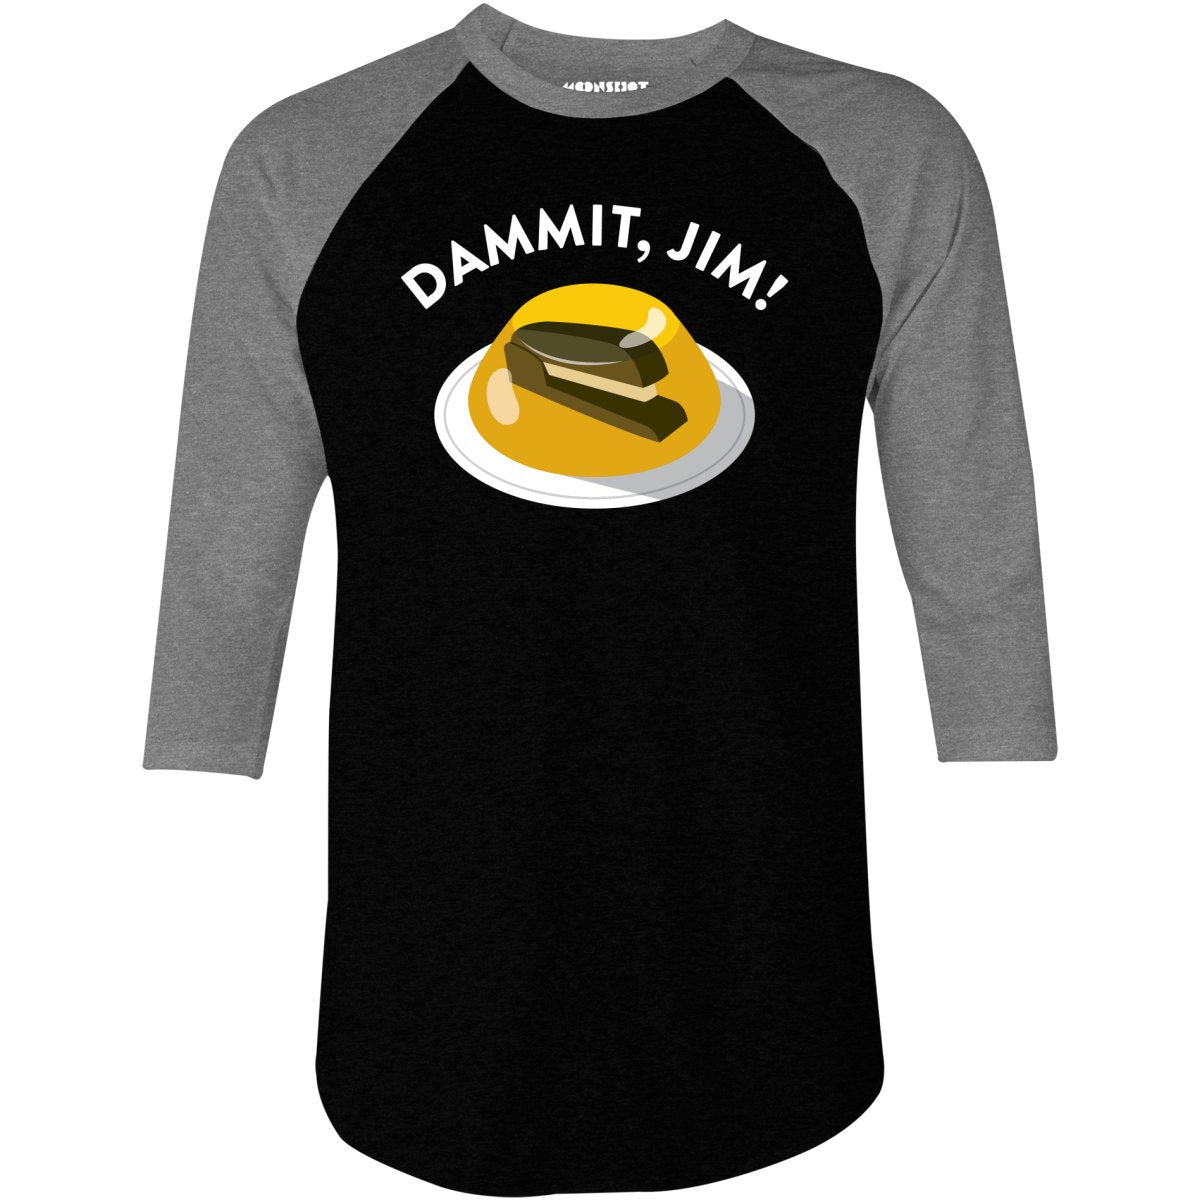 Dammit Jim - 3/4 Sleeve Raglan T-Shirt